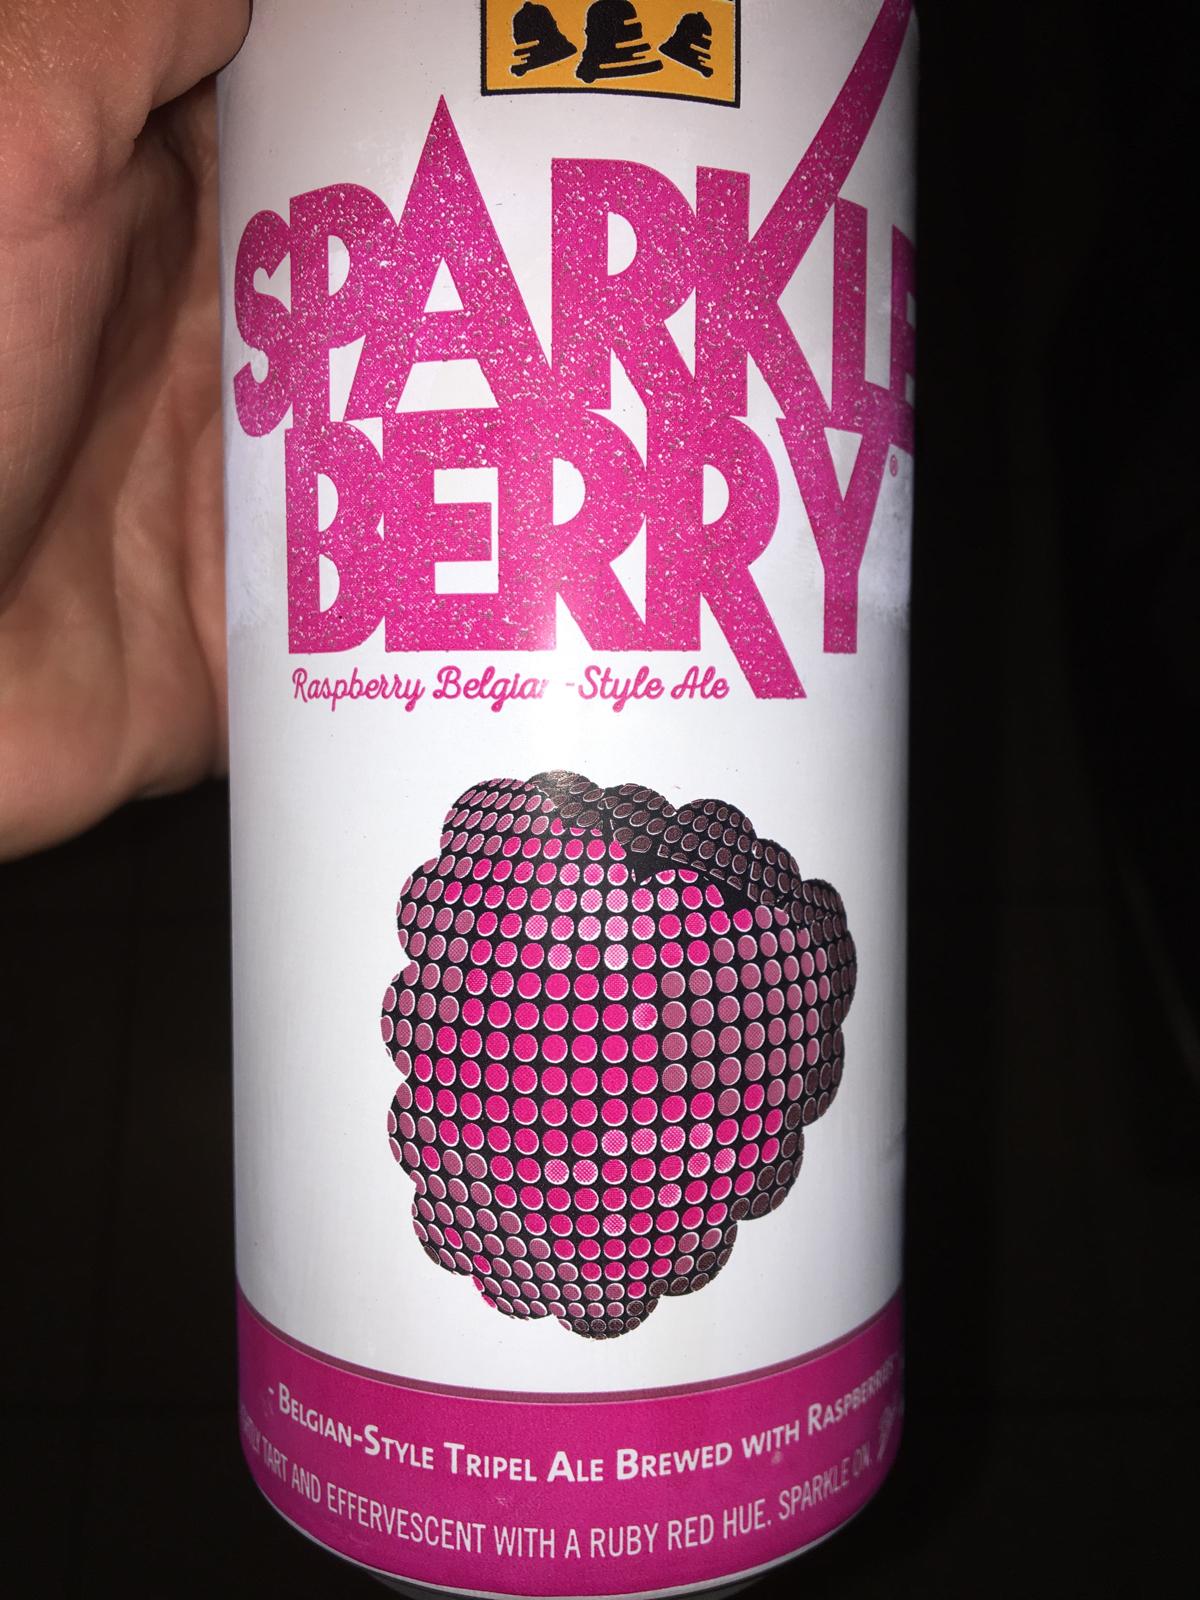 Sparkle Berry Raspberry Belgian-Style